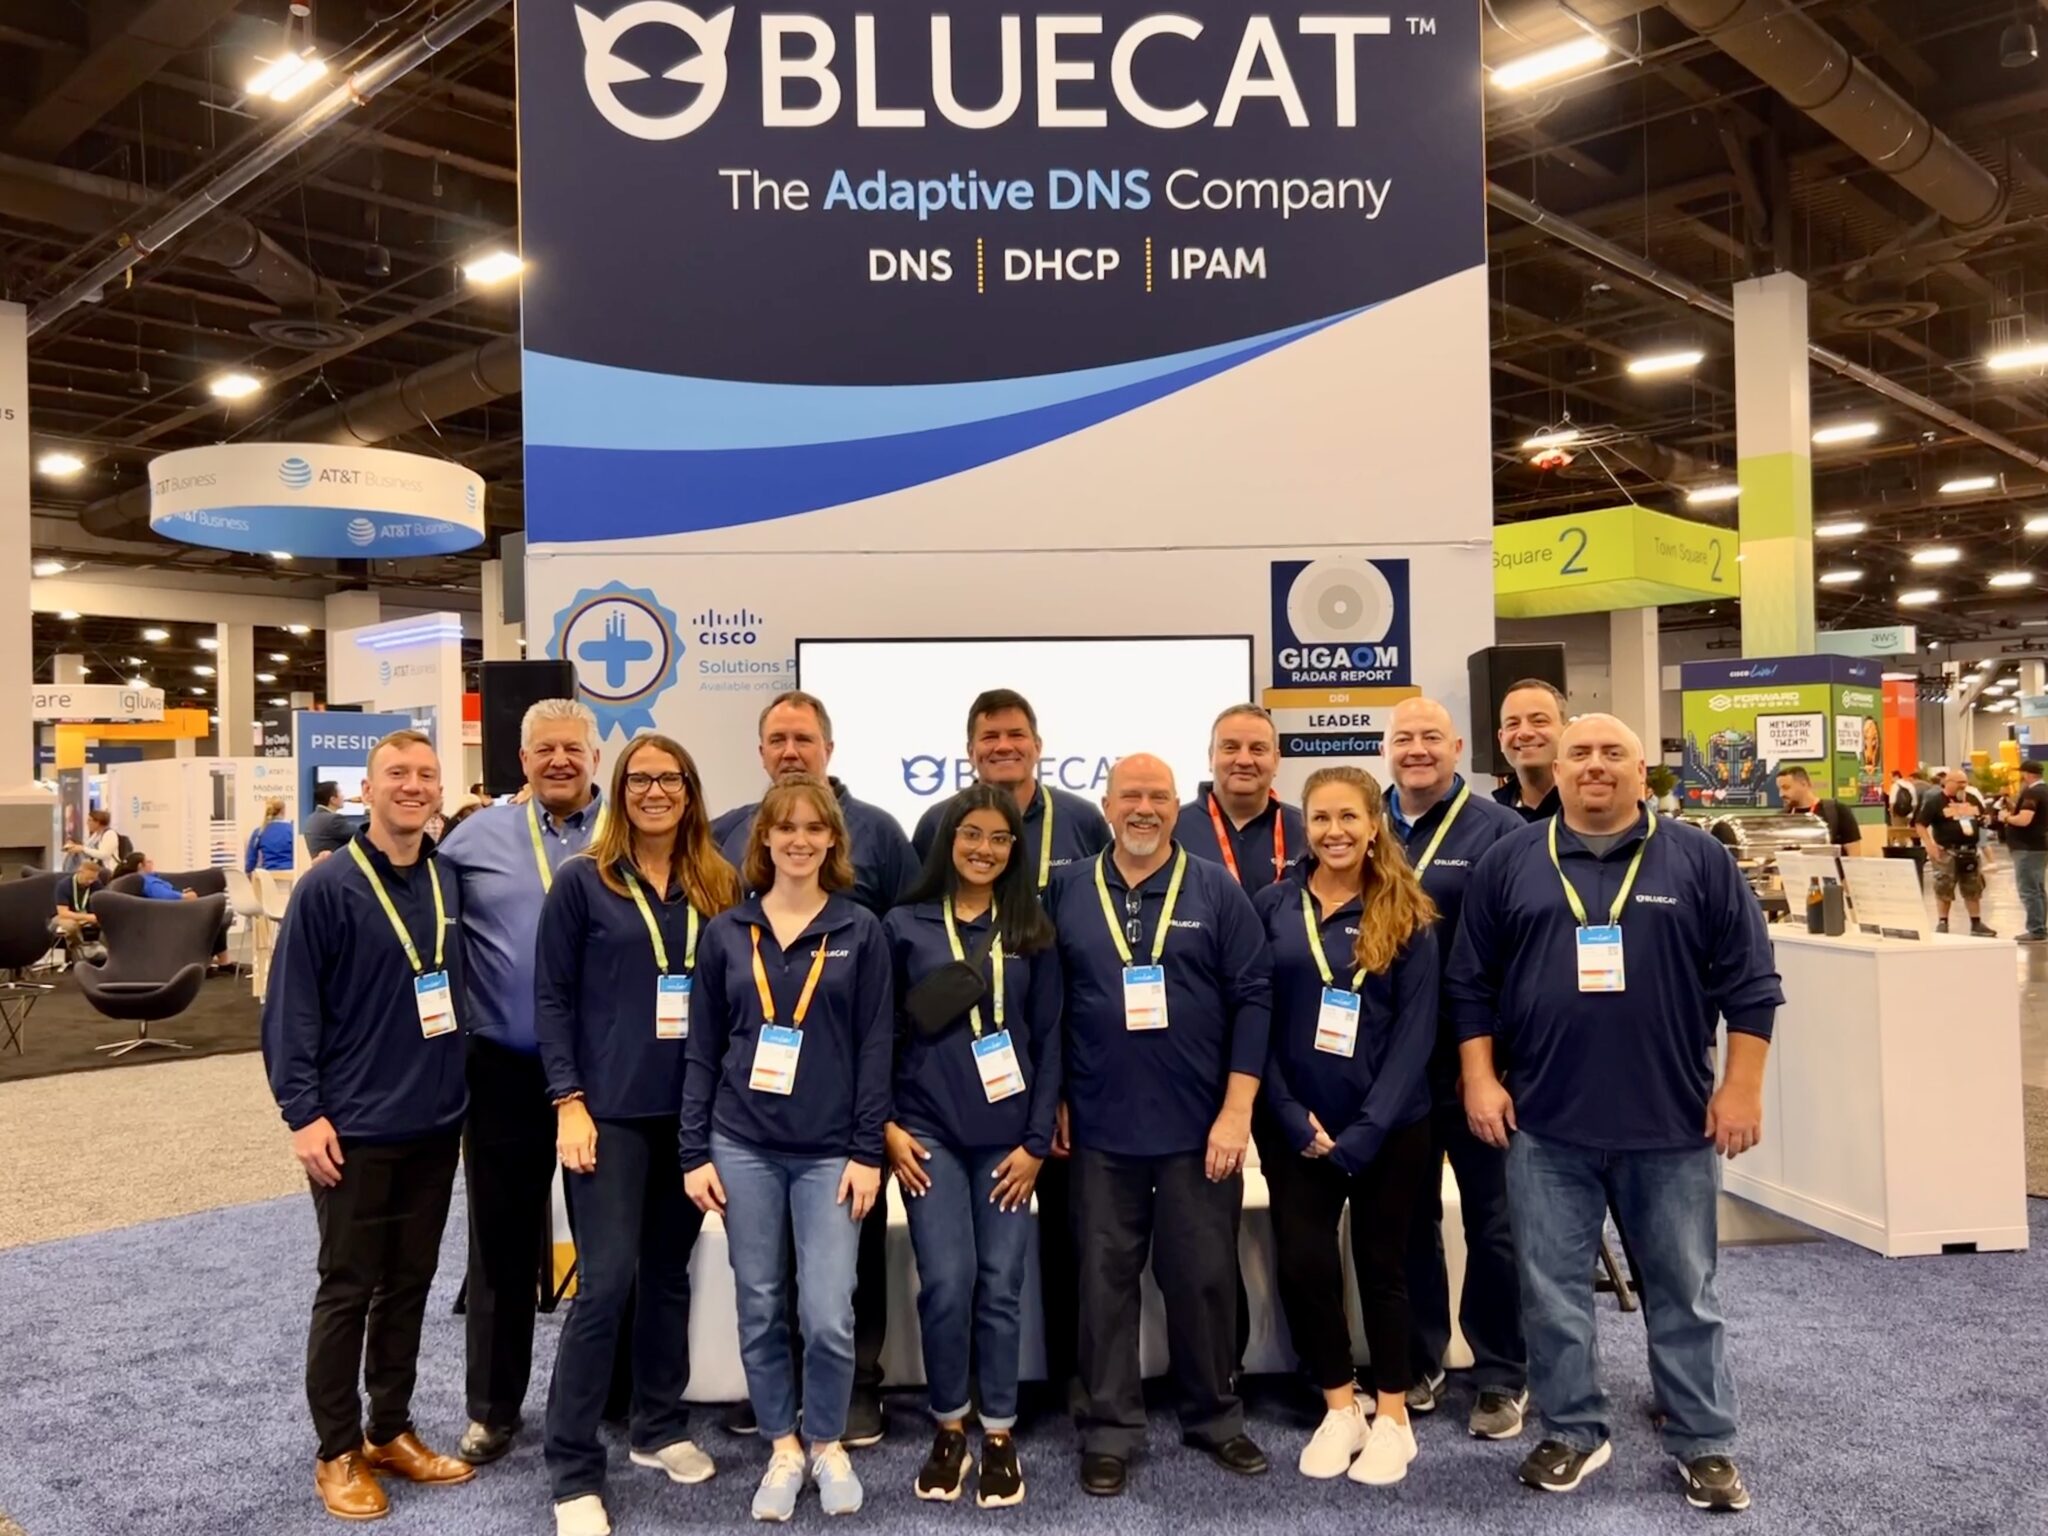 The BlueCat team at BlueCat